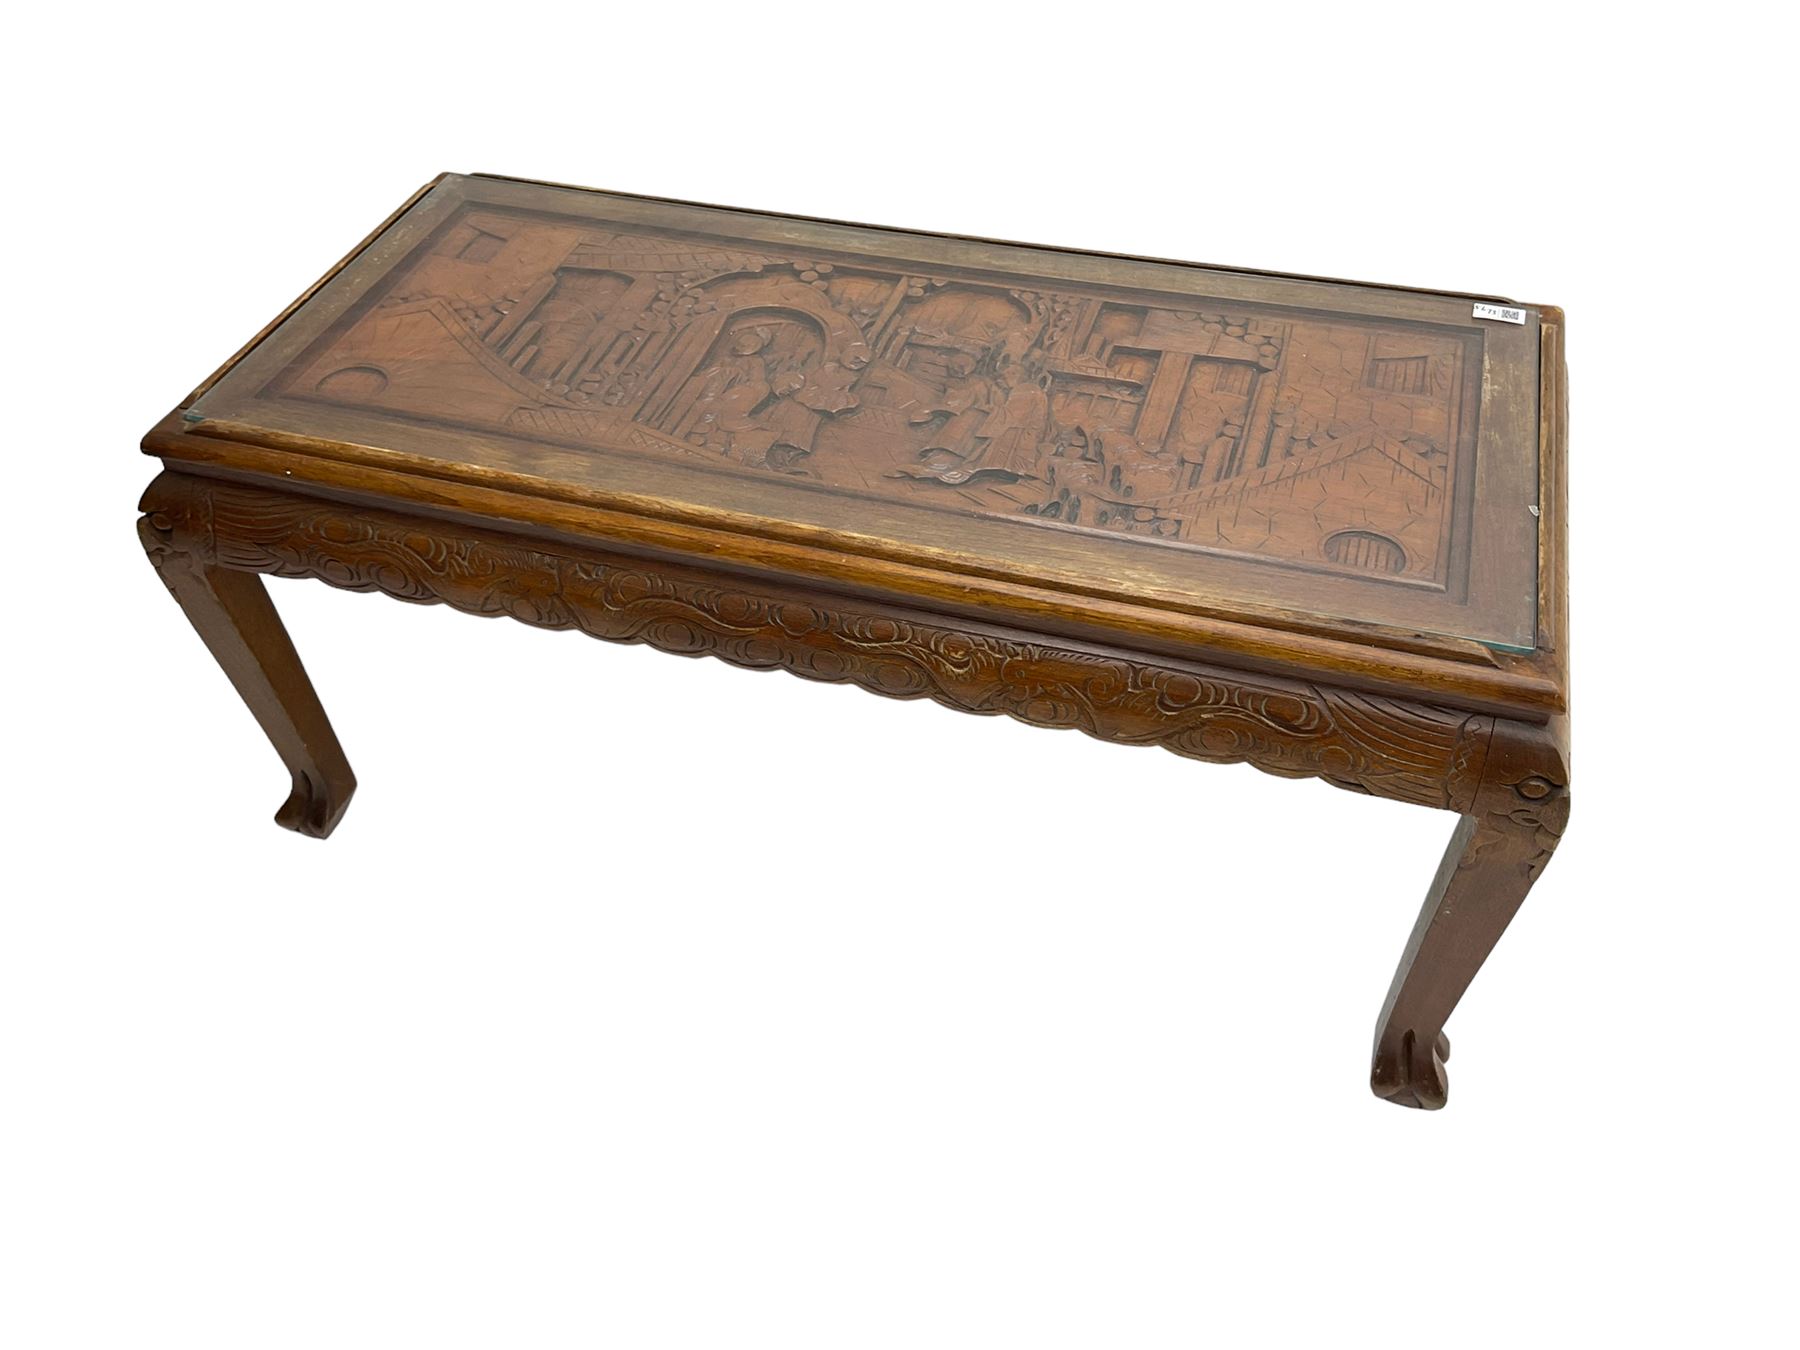 Chinese design hardwood coffee table - Image 2 of 2